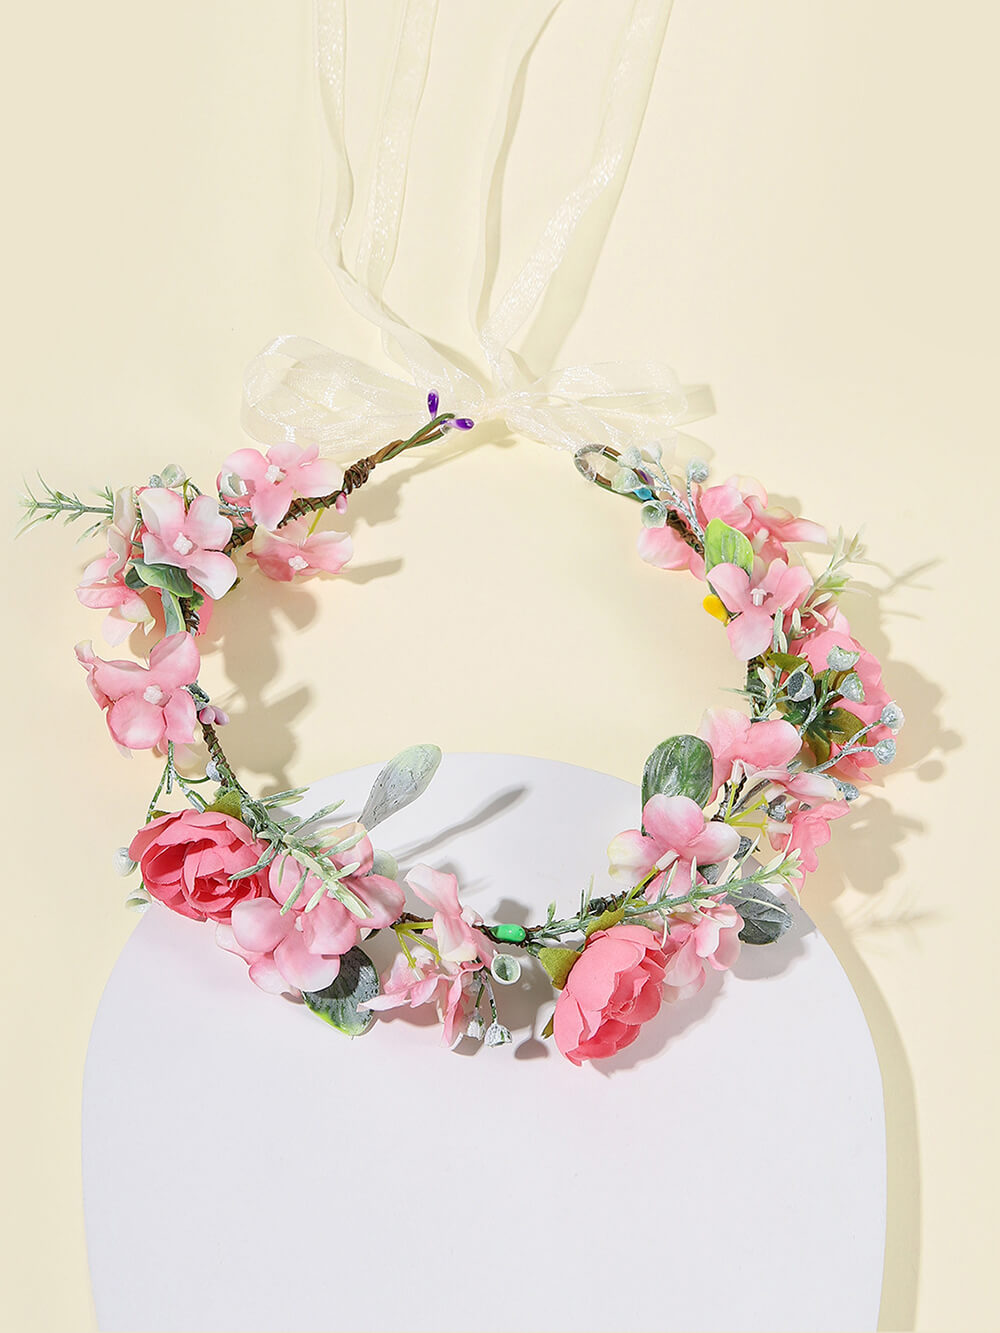 Bridal Flower Crown - Light Pink Jasminum & Blush Roses